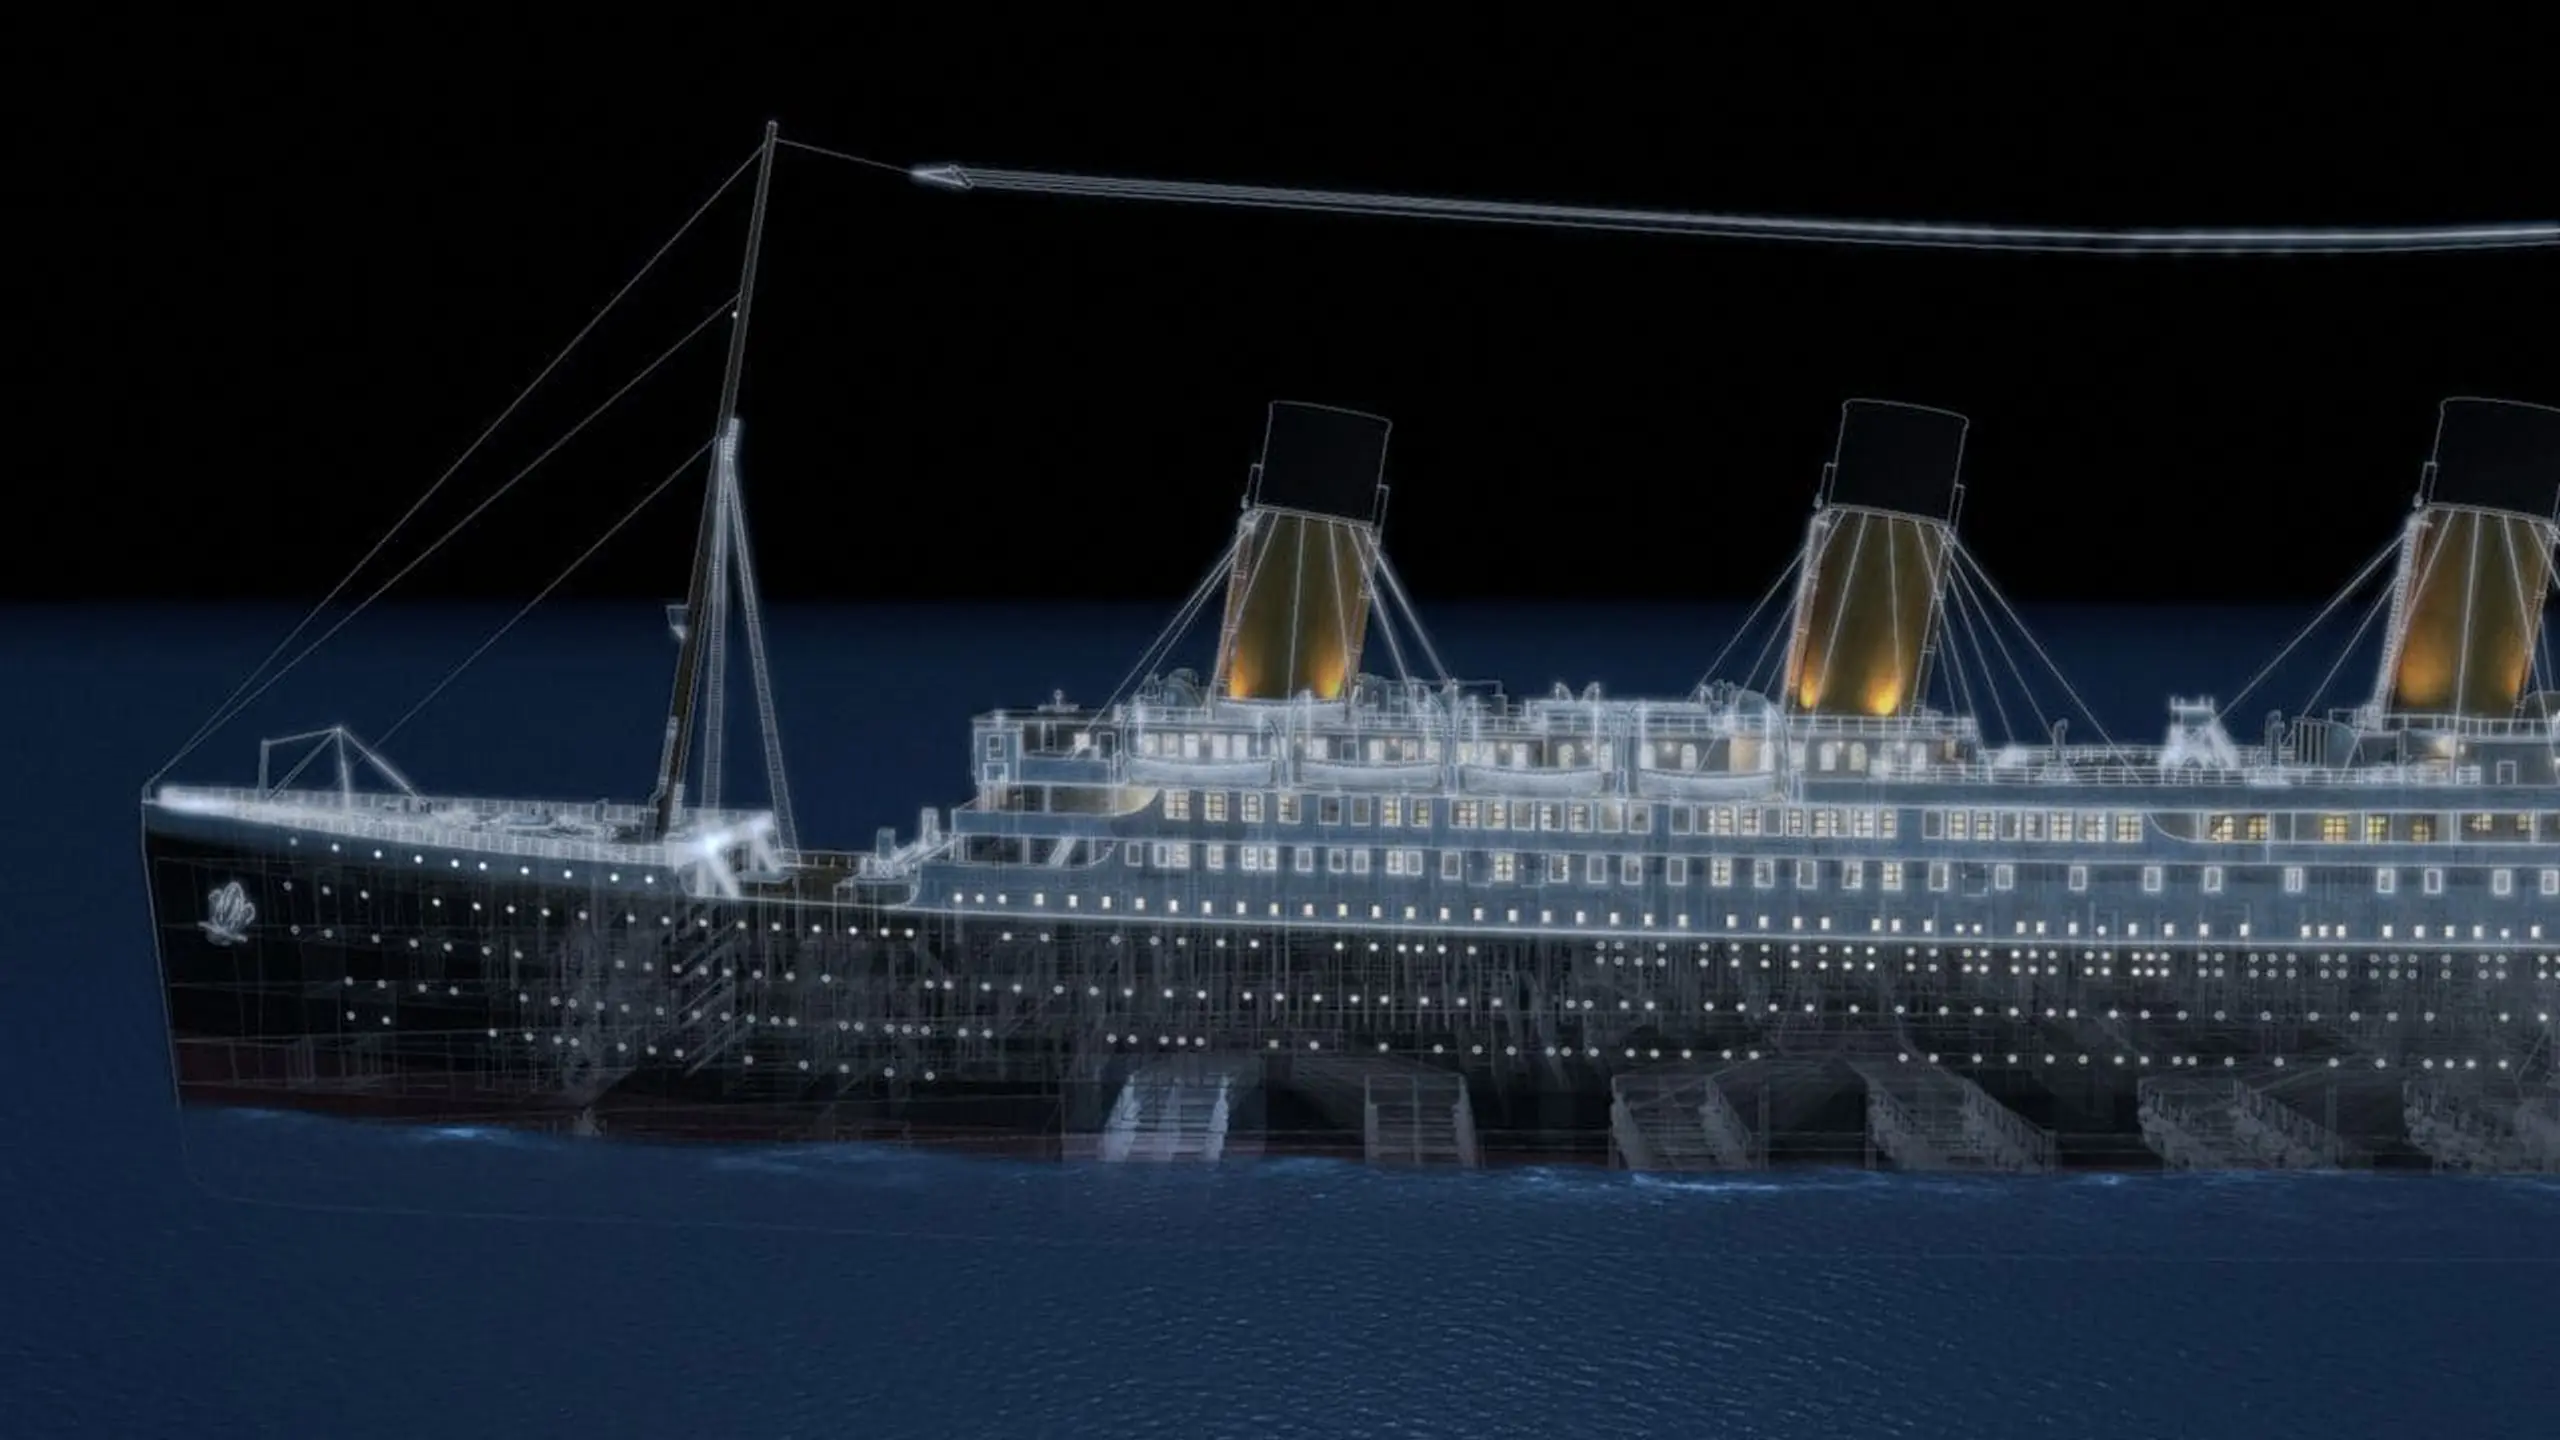 Inside the Titanic - Countdown zum Untergang